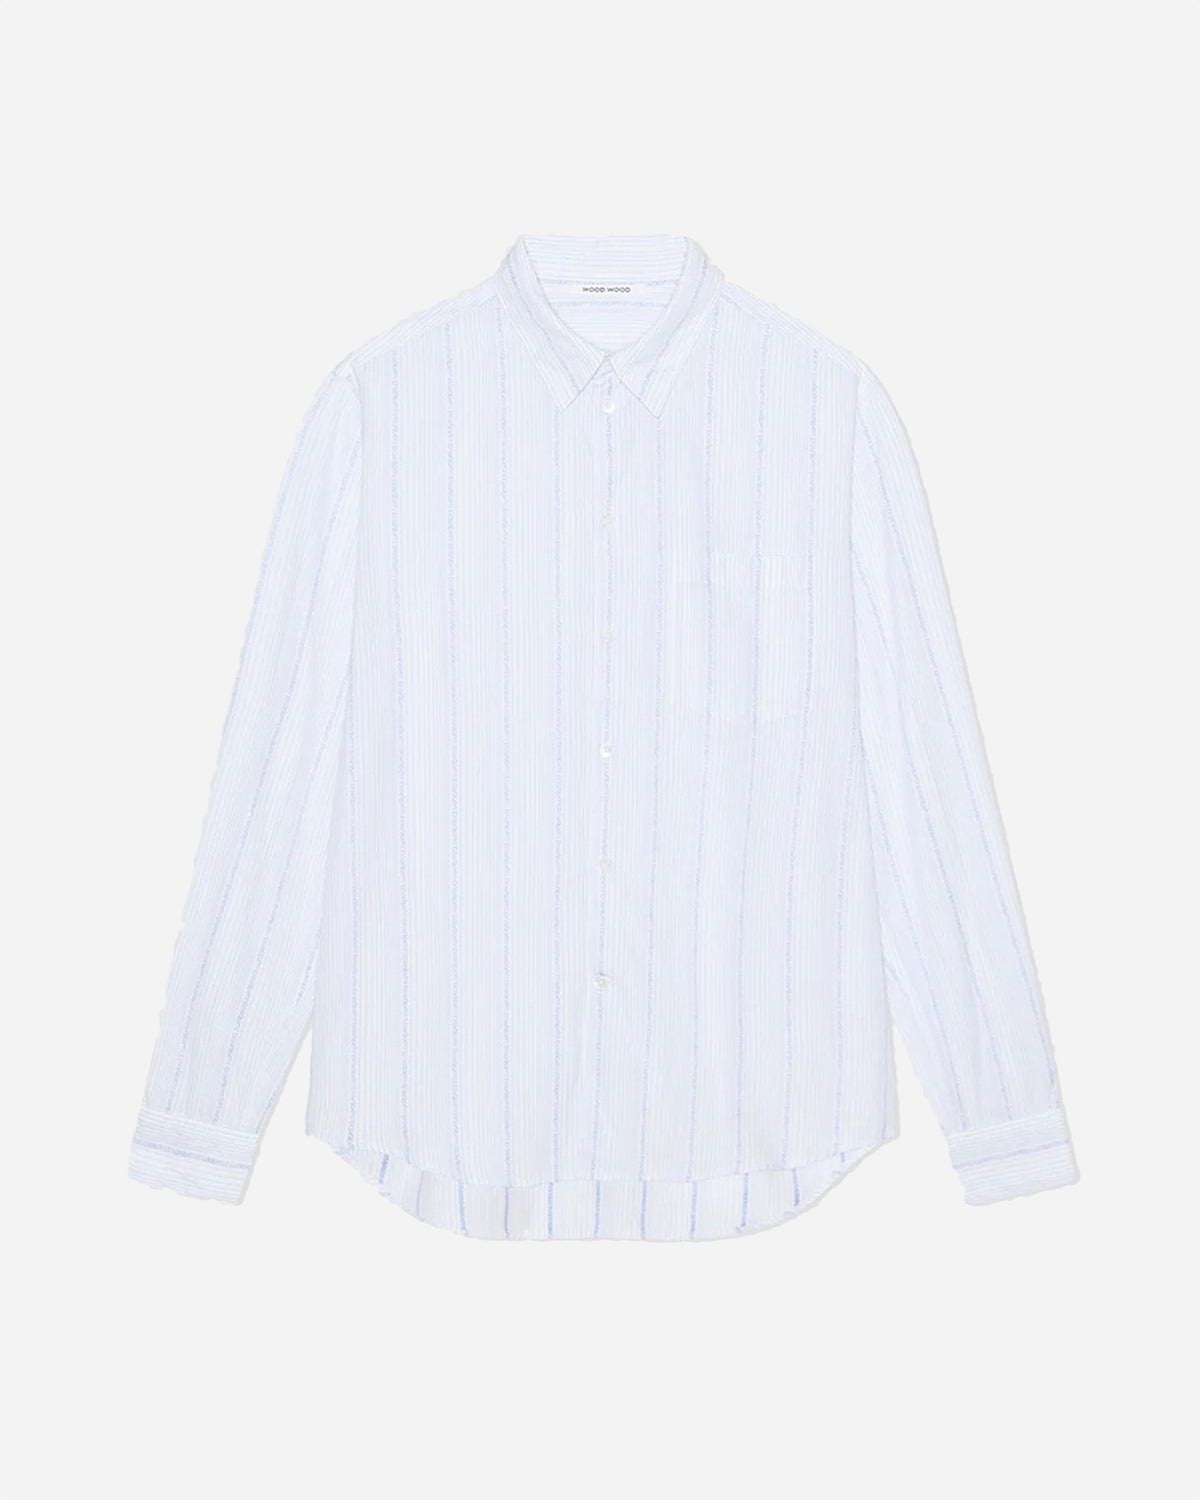 Timothy Jaquard Shirt - Blue Stripe